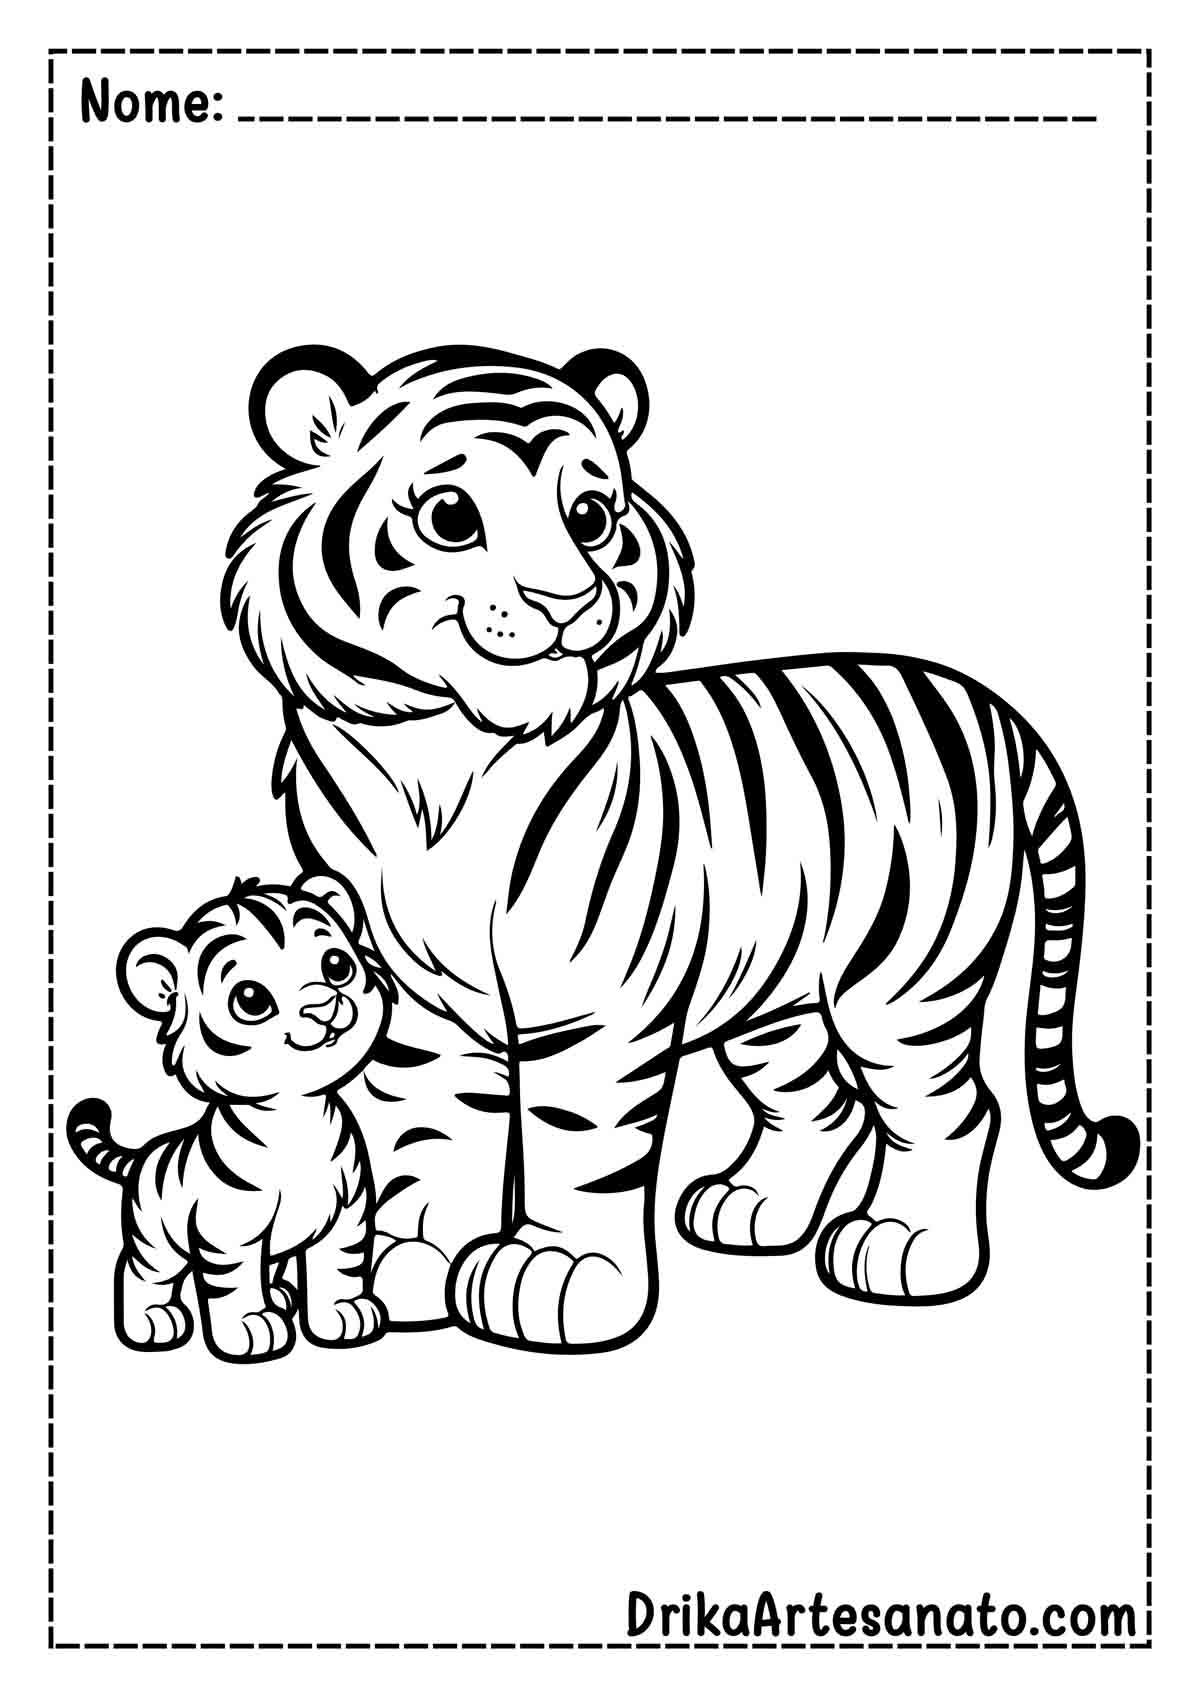 Desenho de Tigre Infantil para Imprimir